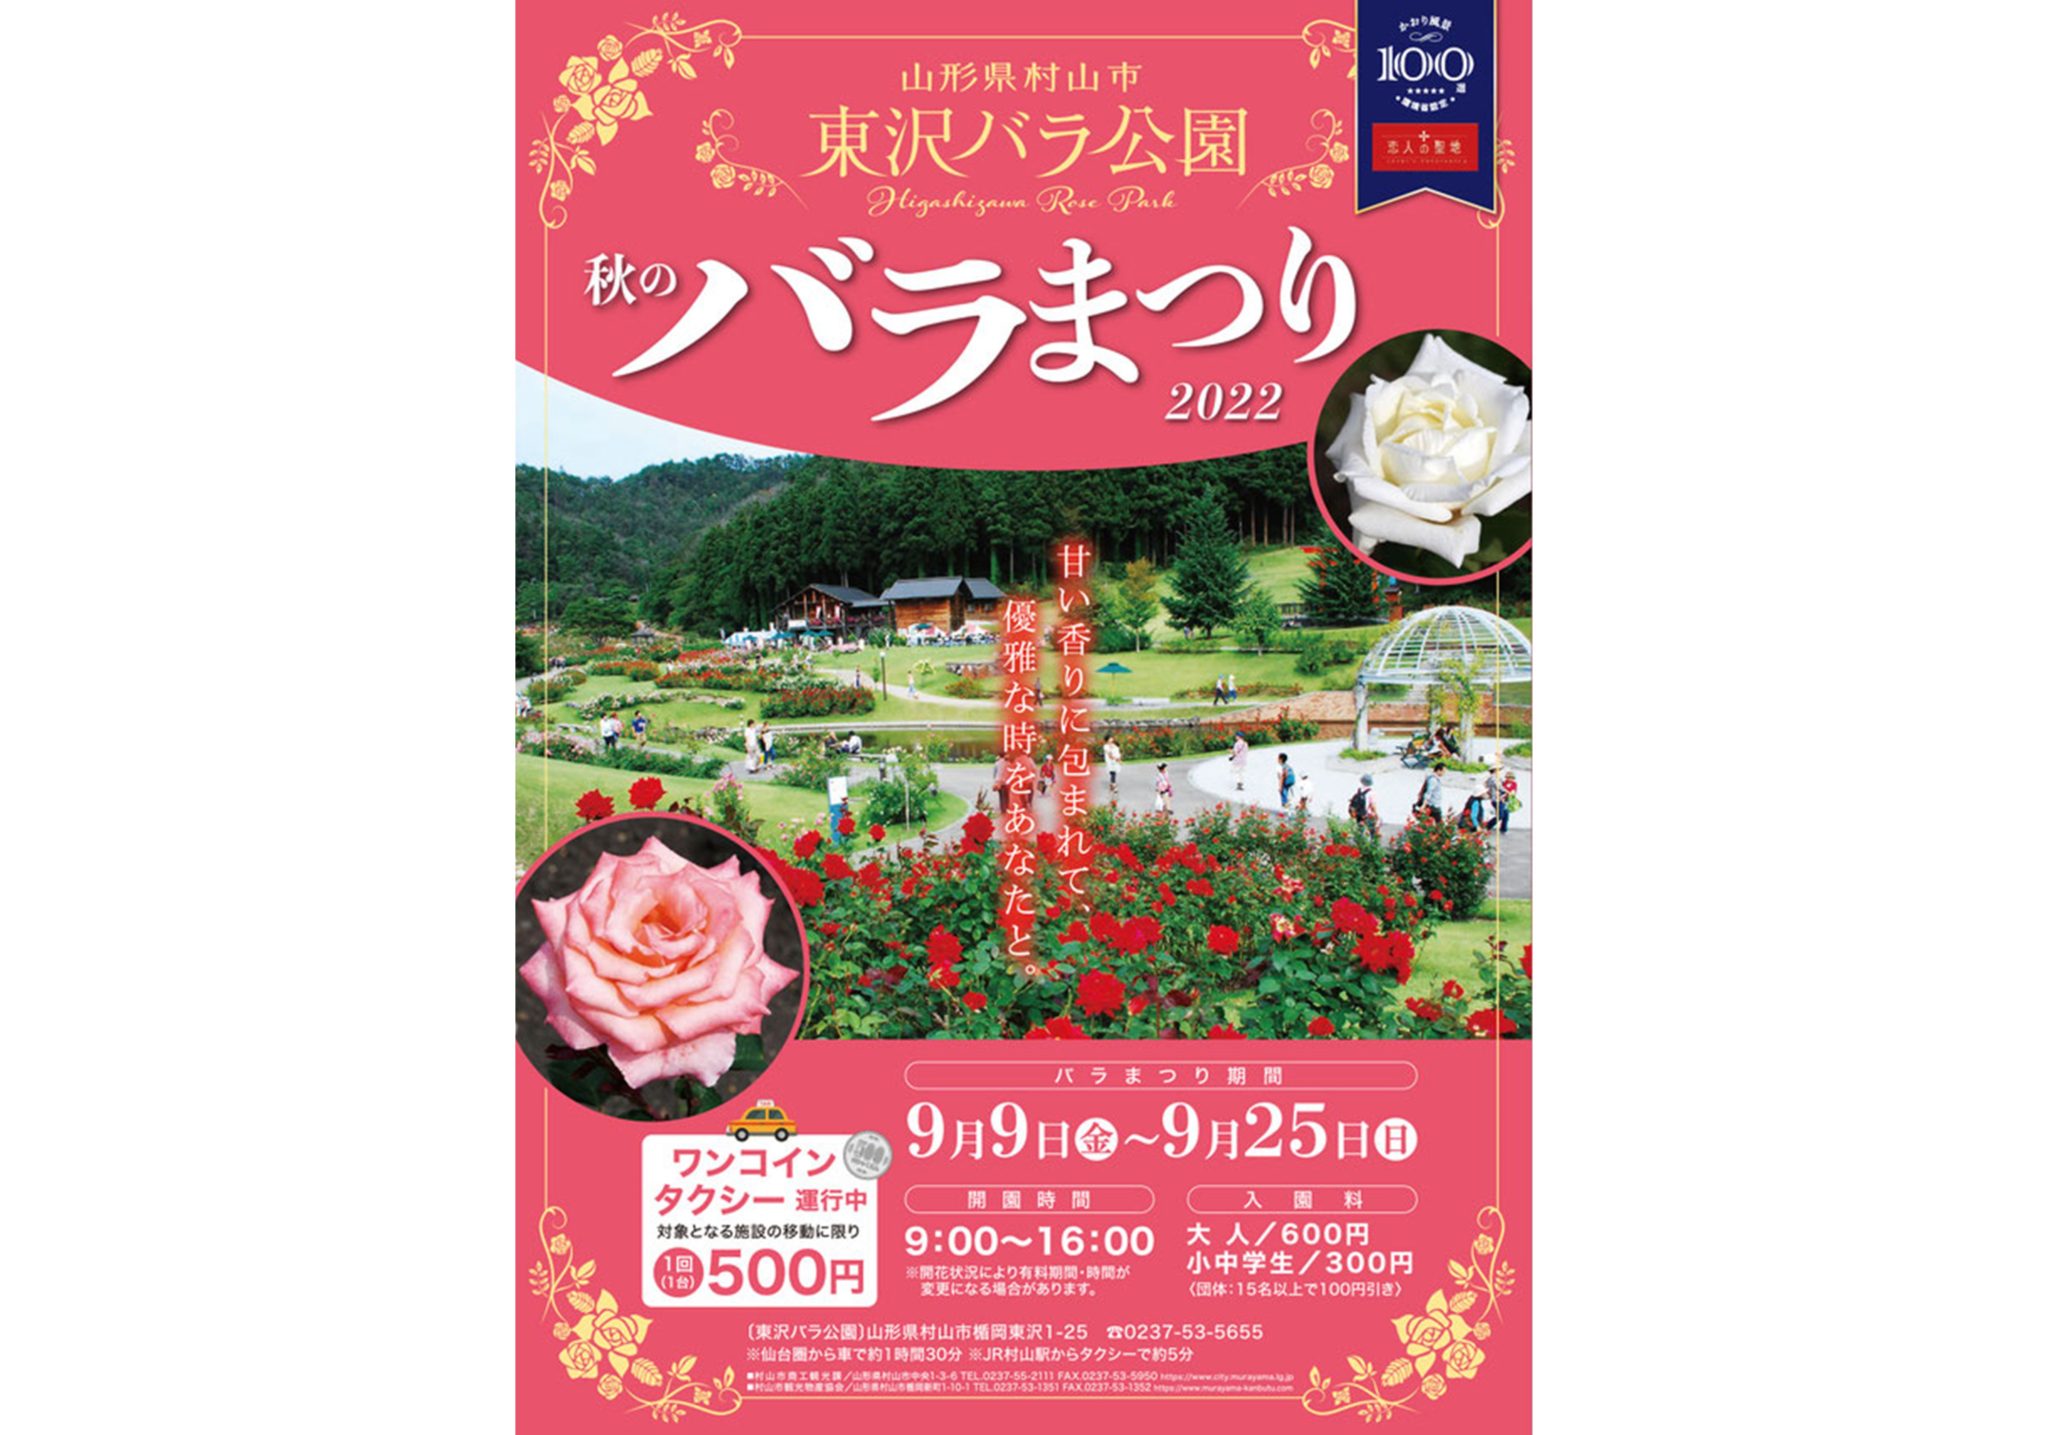 Higashizawa Rose Park Autumn Rose Festival